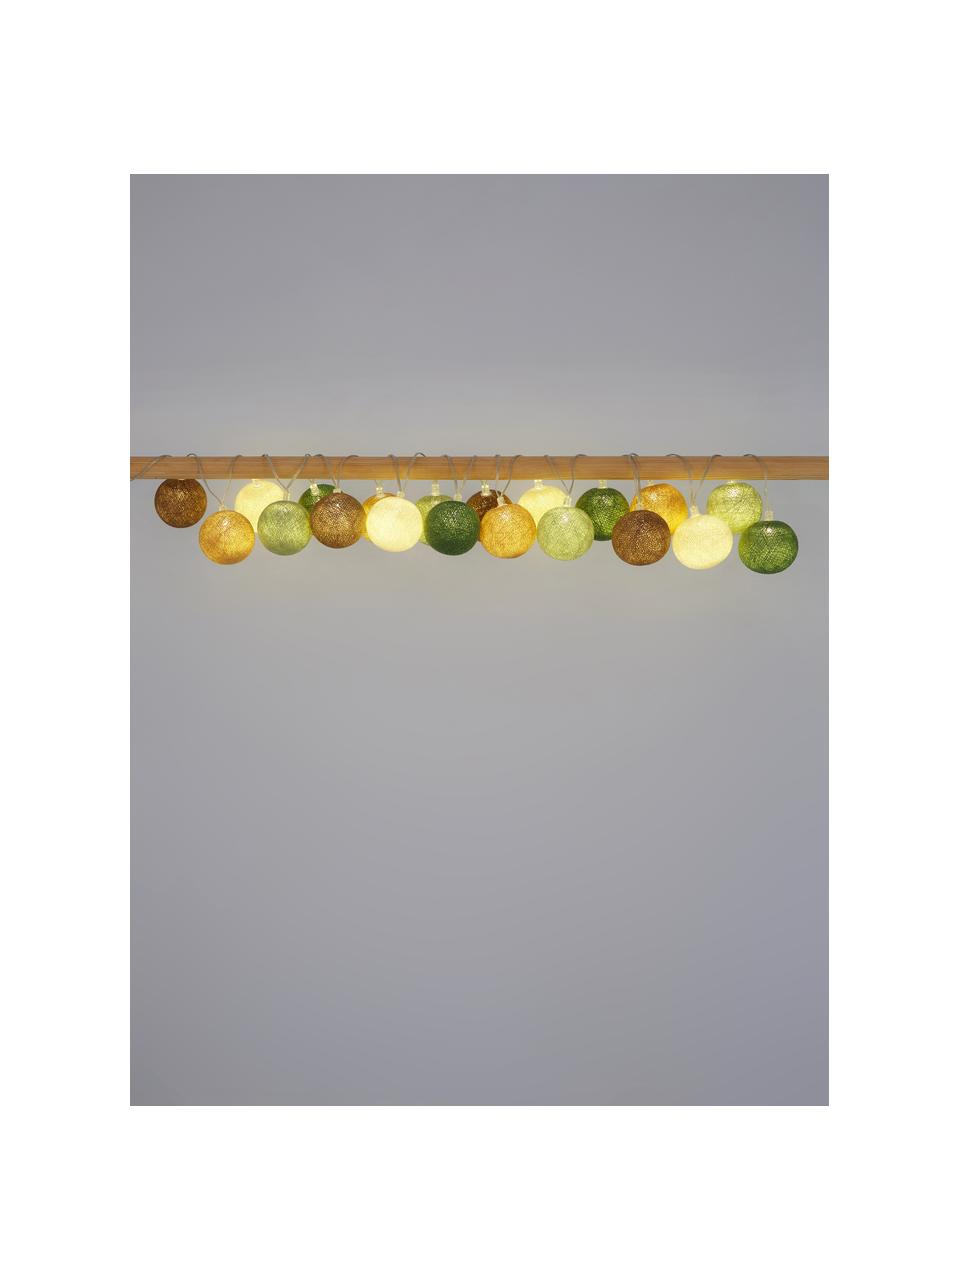 LED lichtslinger Colorain, 378 cm, Lampions: polyester, WFTO gecertifi, Beige, bruin-, groentinten, L 378 cm